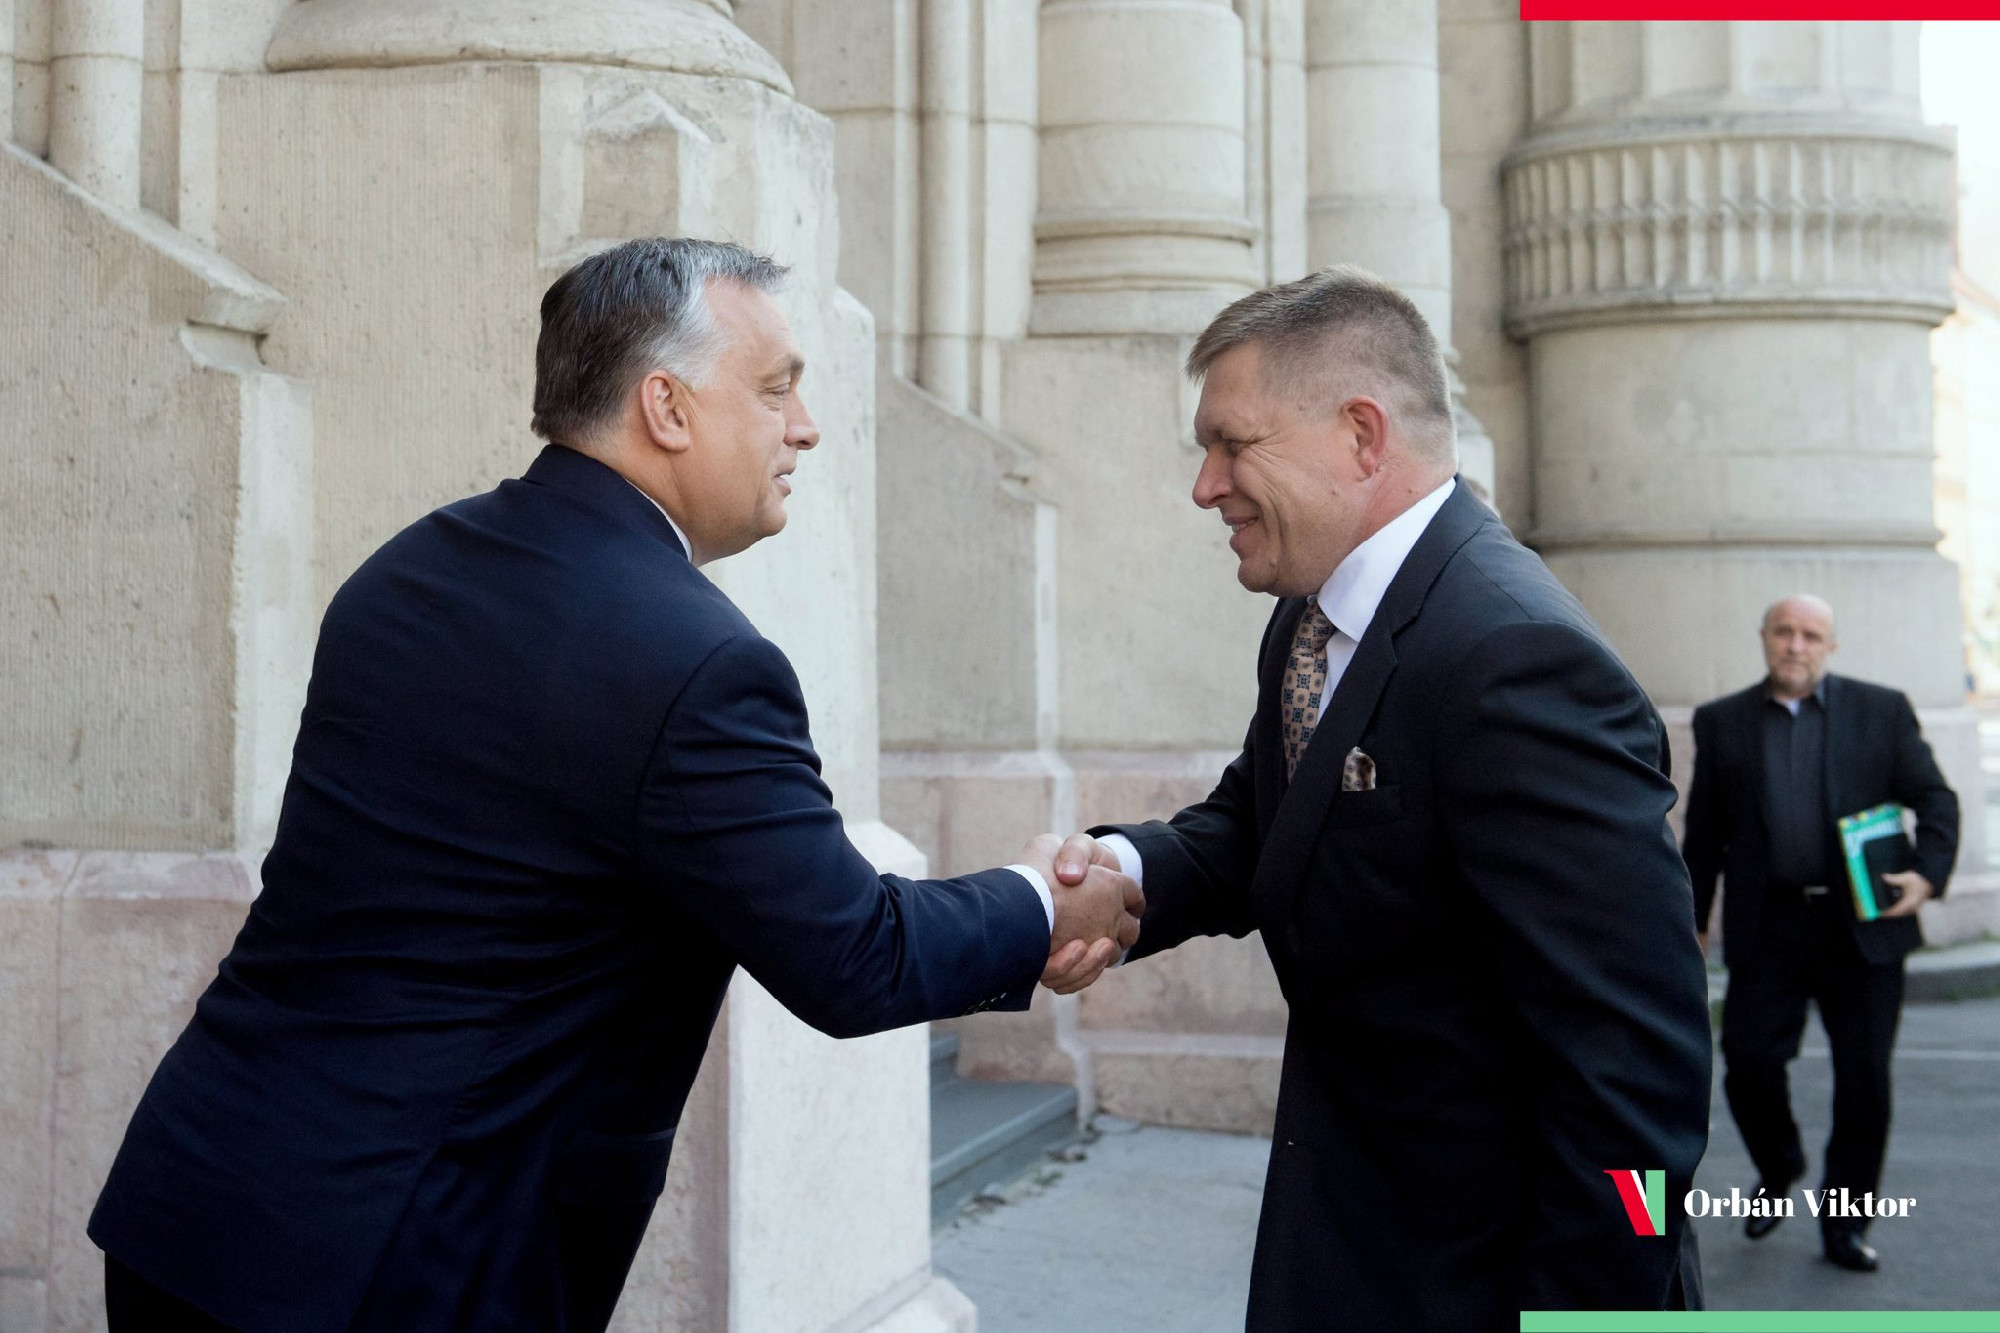 Orbán sikere, a magyarok kudarca